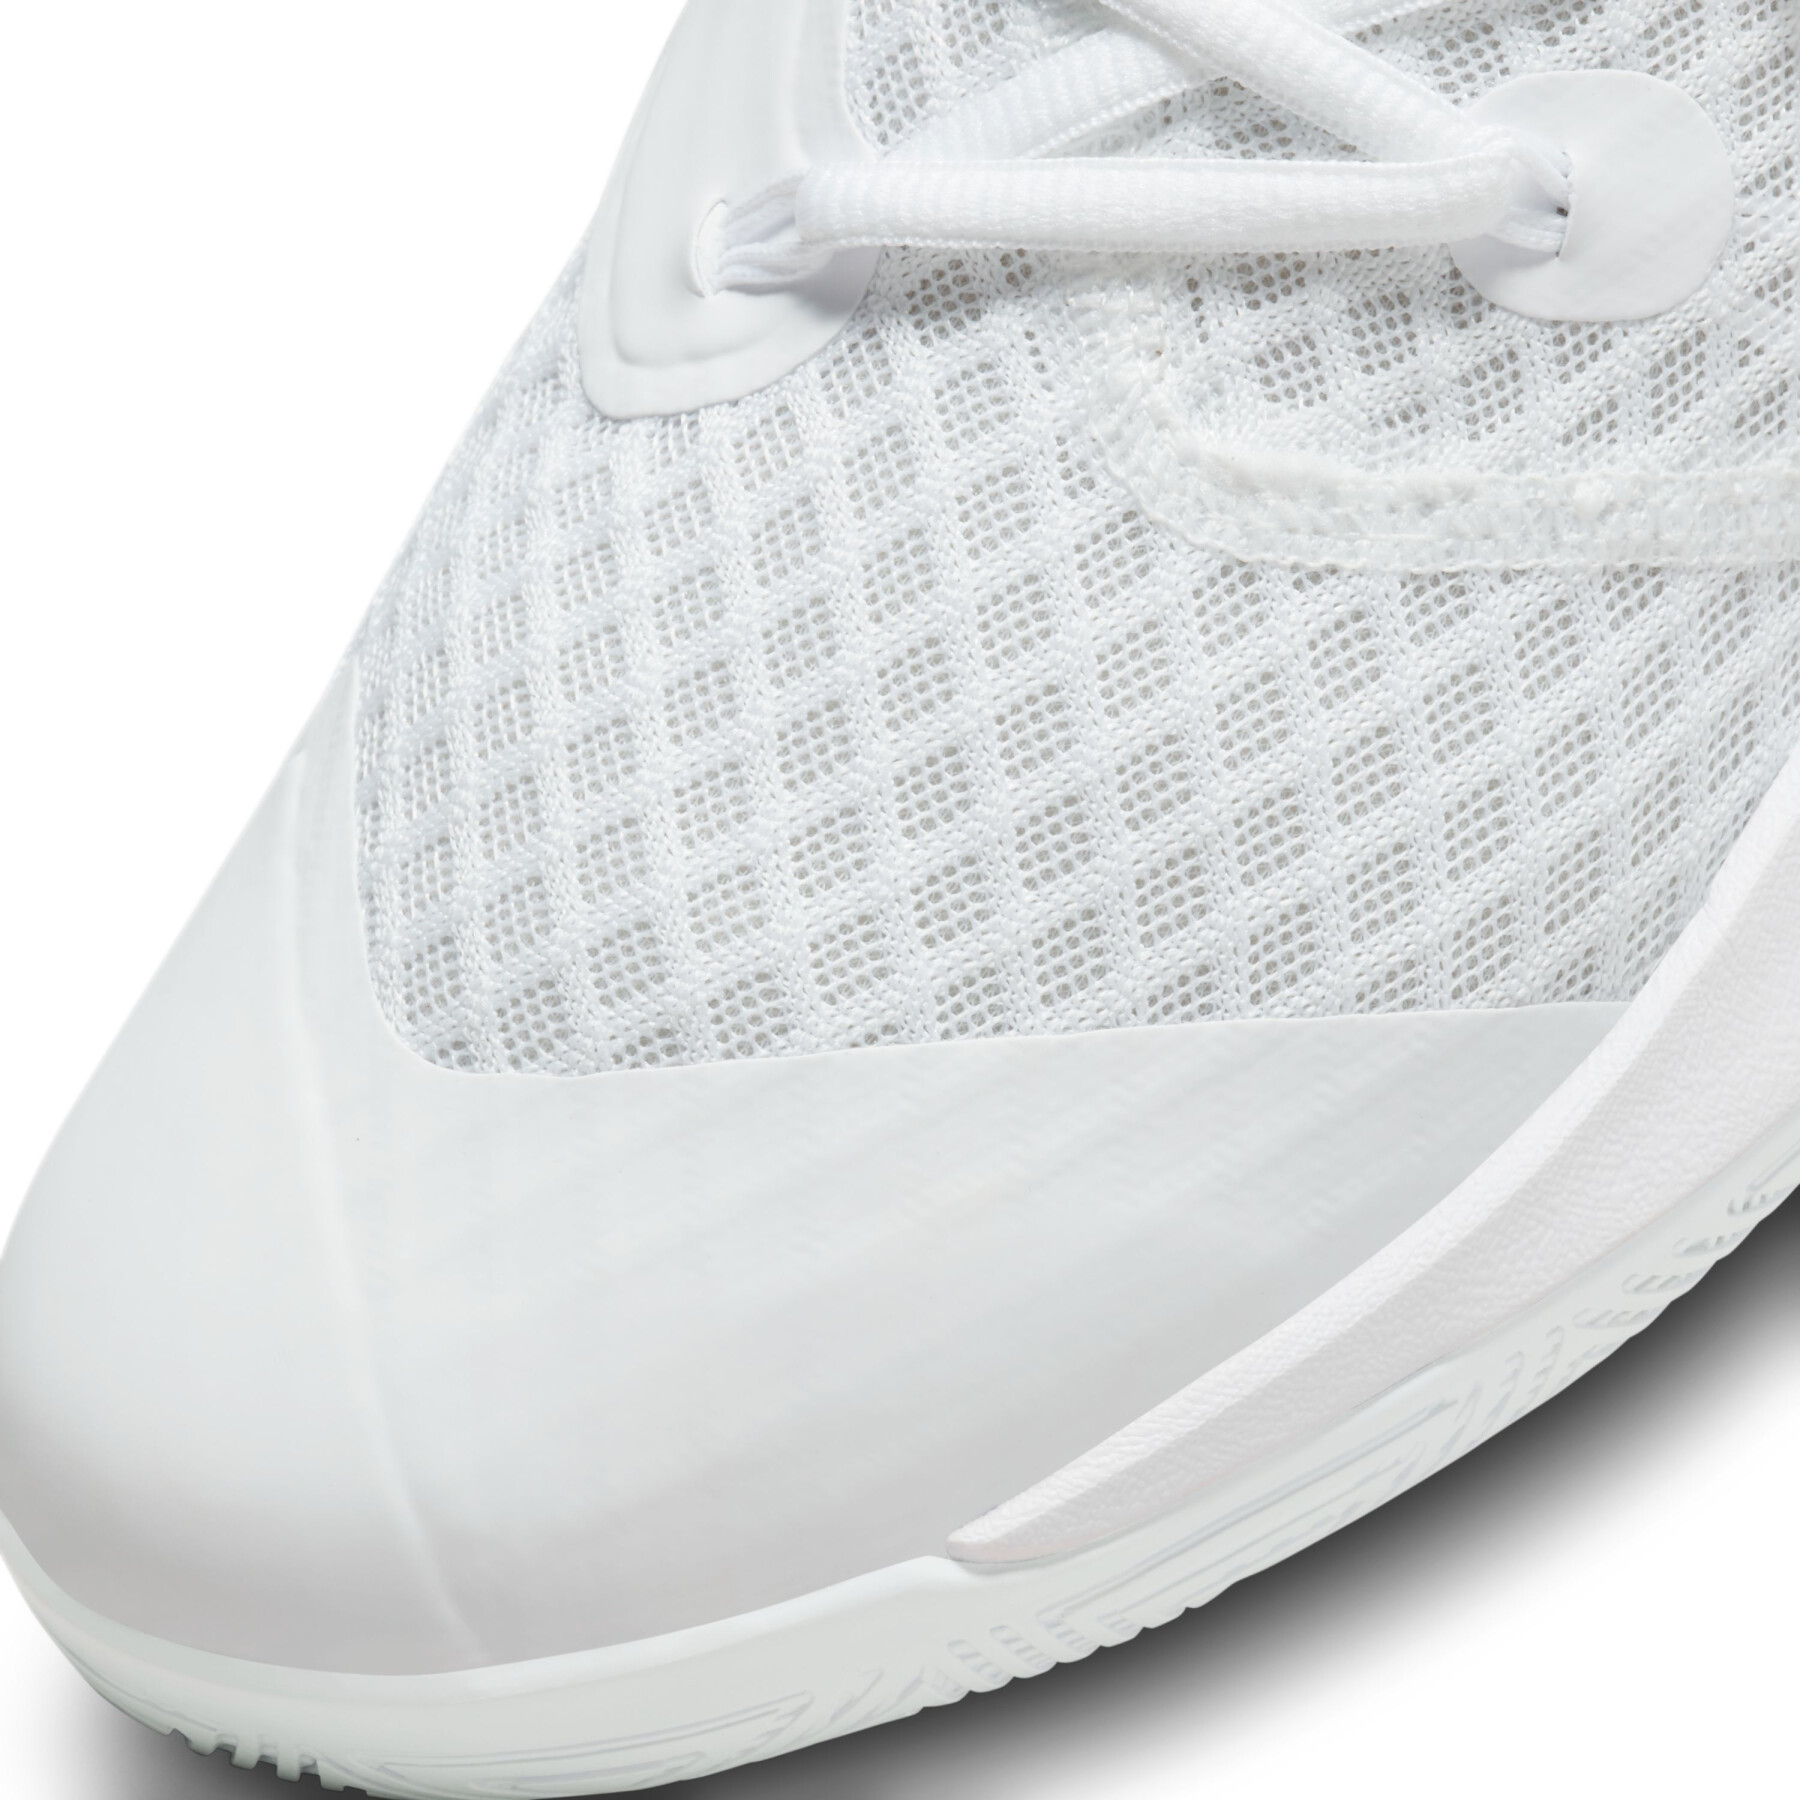 Schuhe Nike Hyperspeed Court